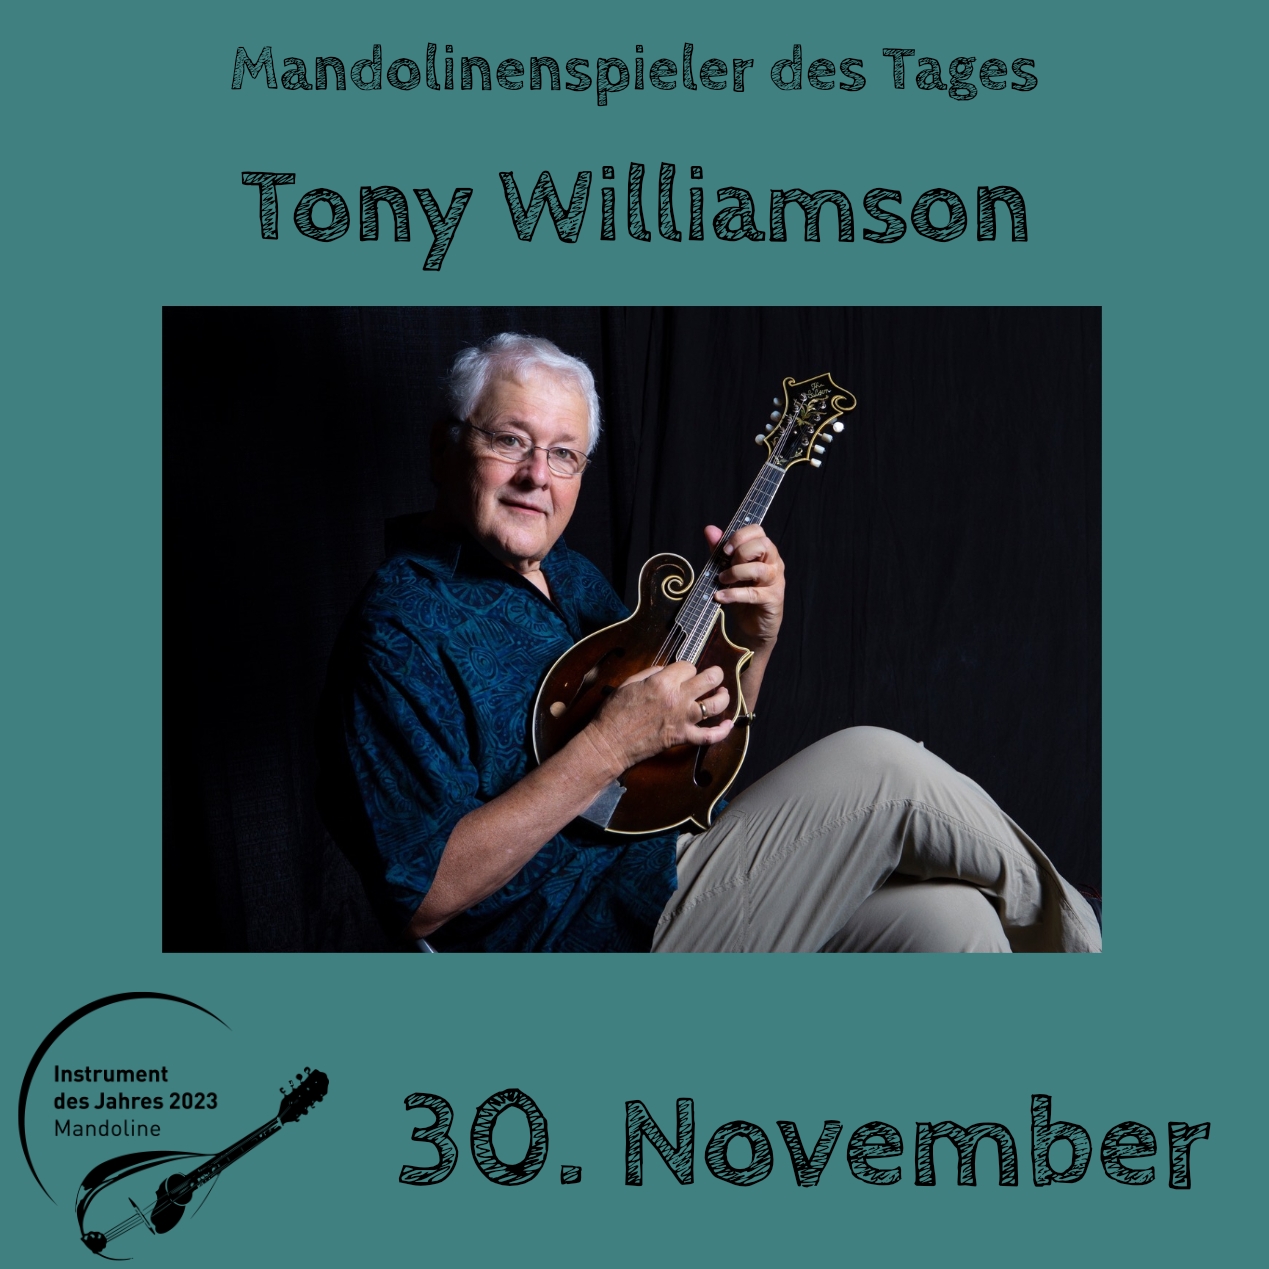 30. November - Tony Williamson Instrument des Jahres 2023 Mandolinenspieler Mandolinenspielerin des Tages